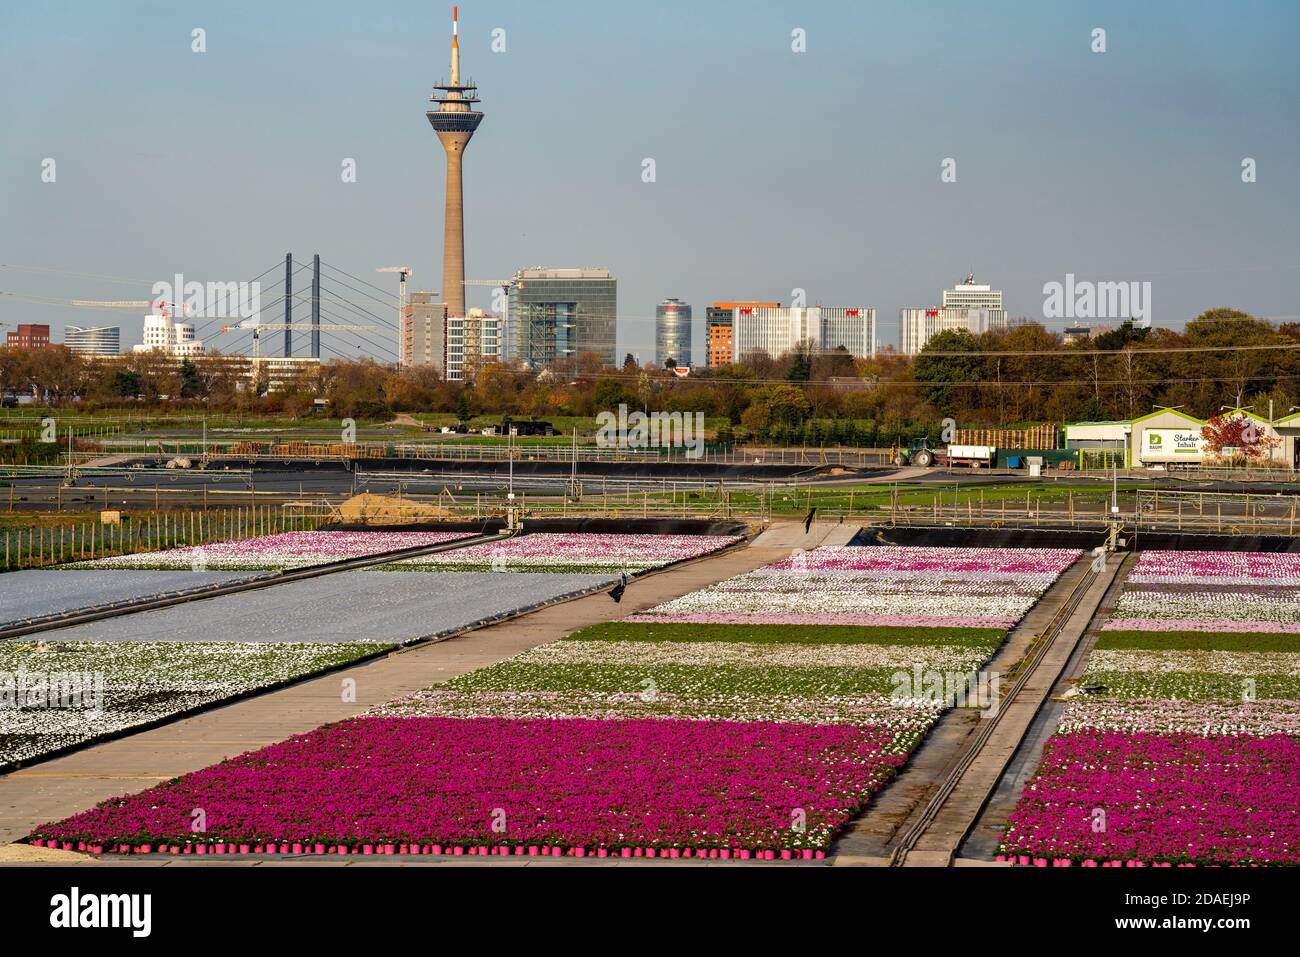 Nursery, plant breeding, ornamental plants grow in flower pots, outdoor, Düsseldorf-Volmerswerth, skyline of the city centre of Düsseldorf, Germany Stock Photo